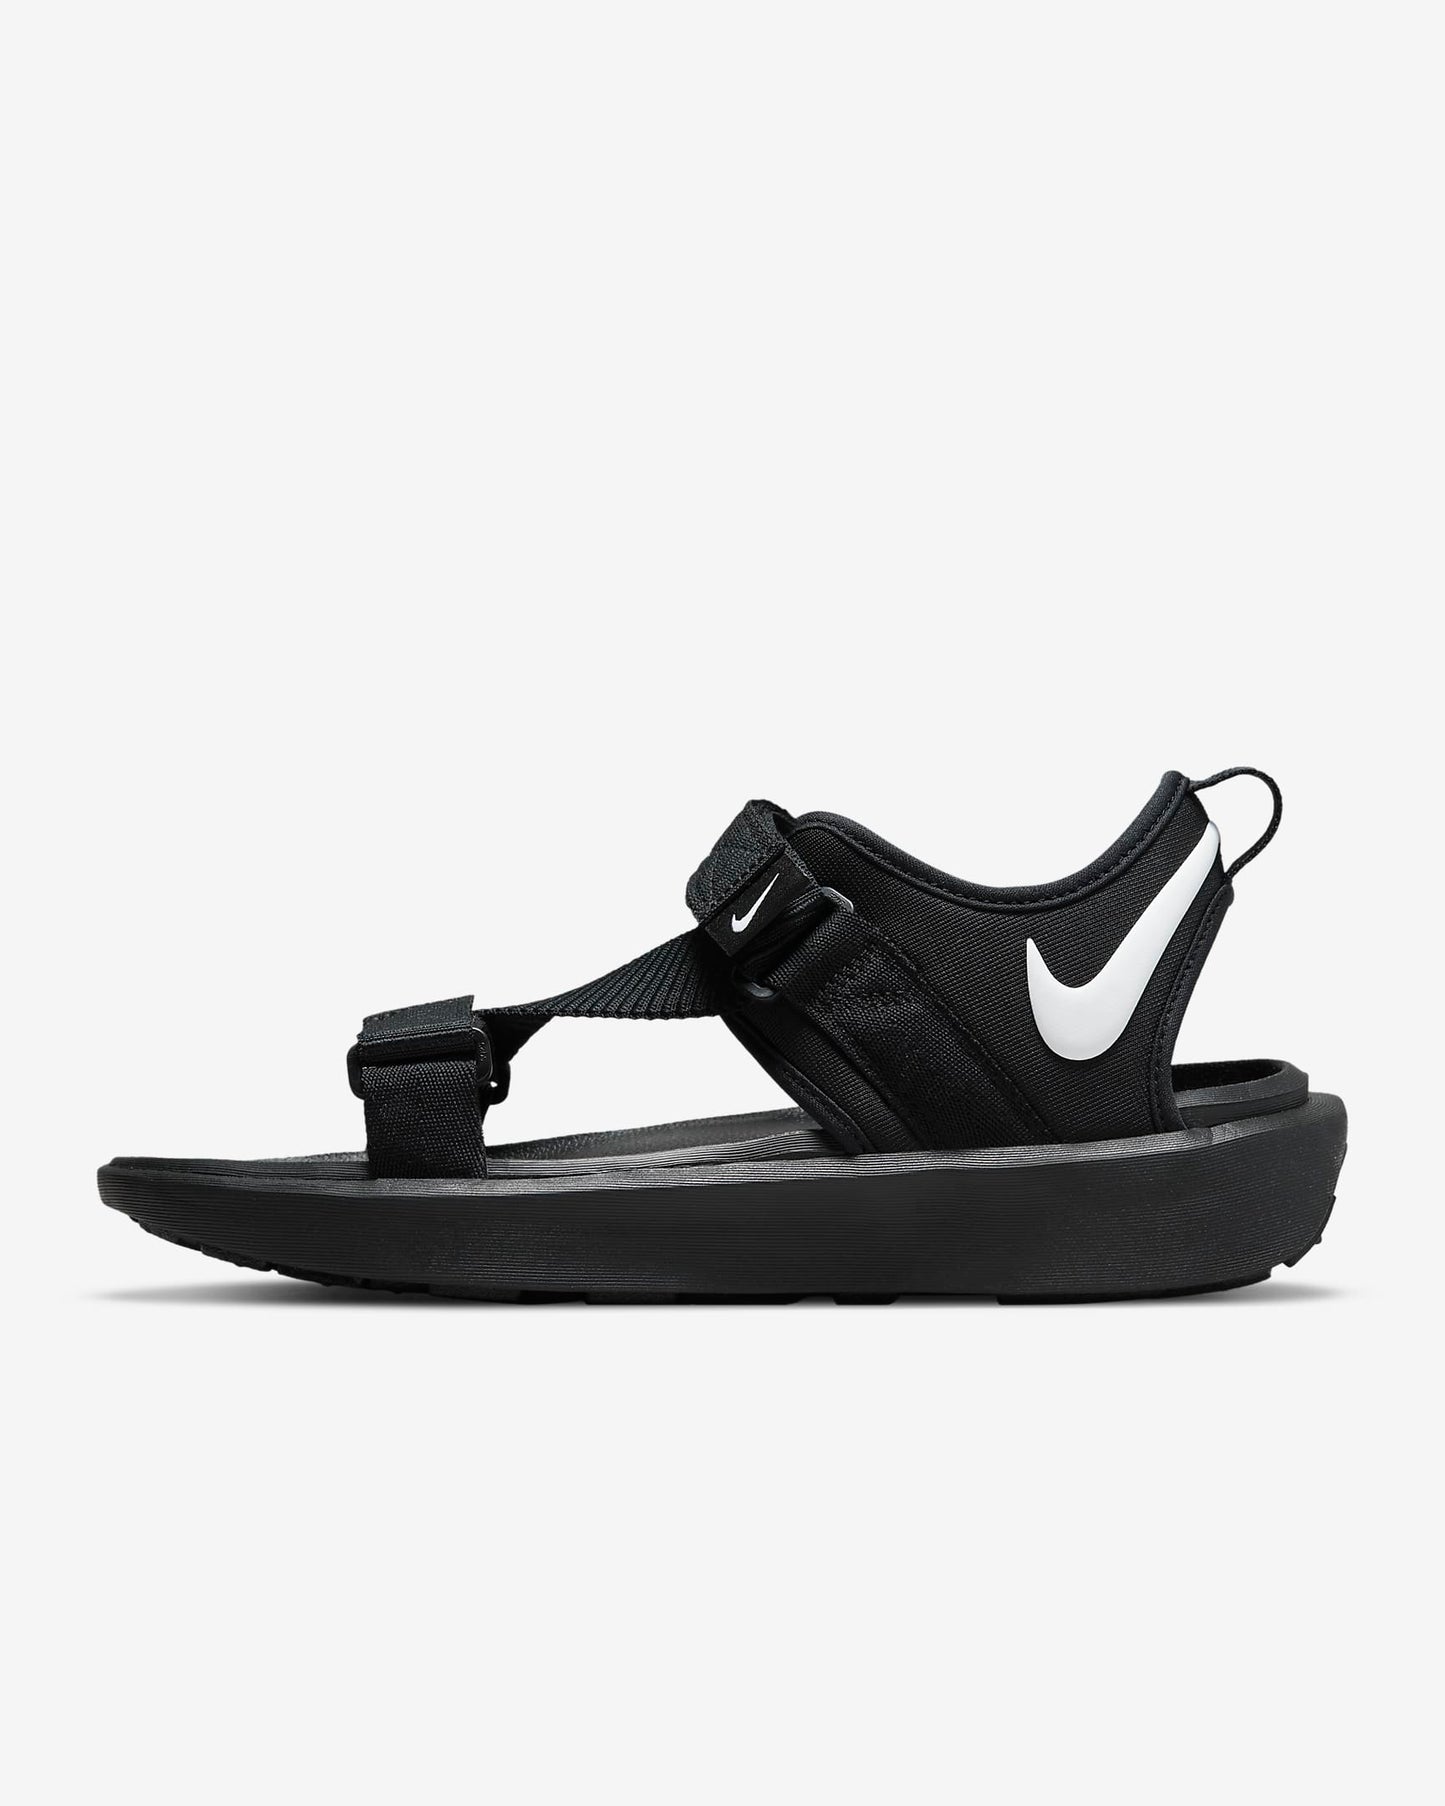 Nike Men's Vista Sandals, Black/Black/White